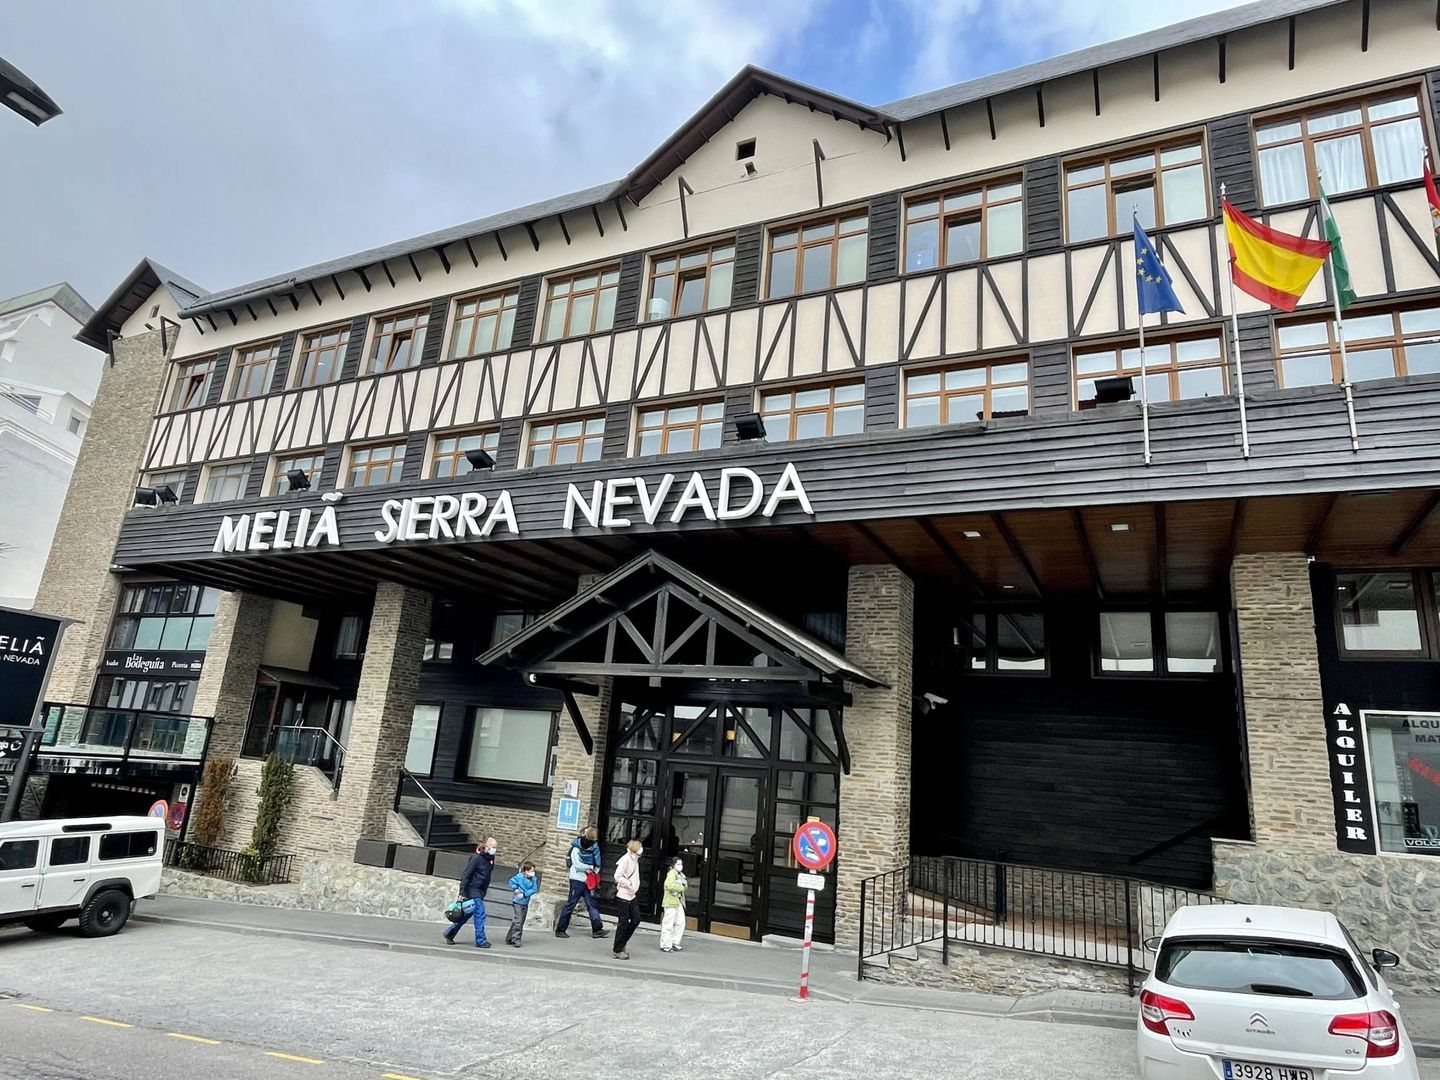 Hotel Meliá Sierra Nevada. (J. L. Losa)